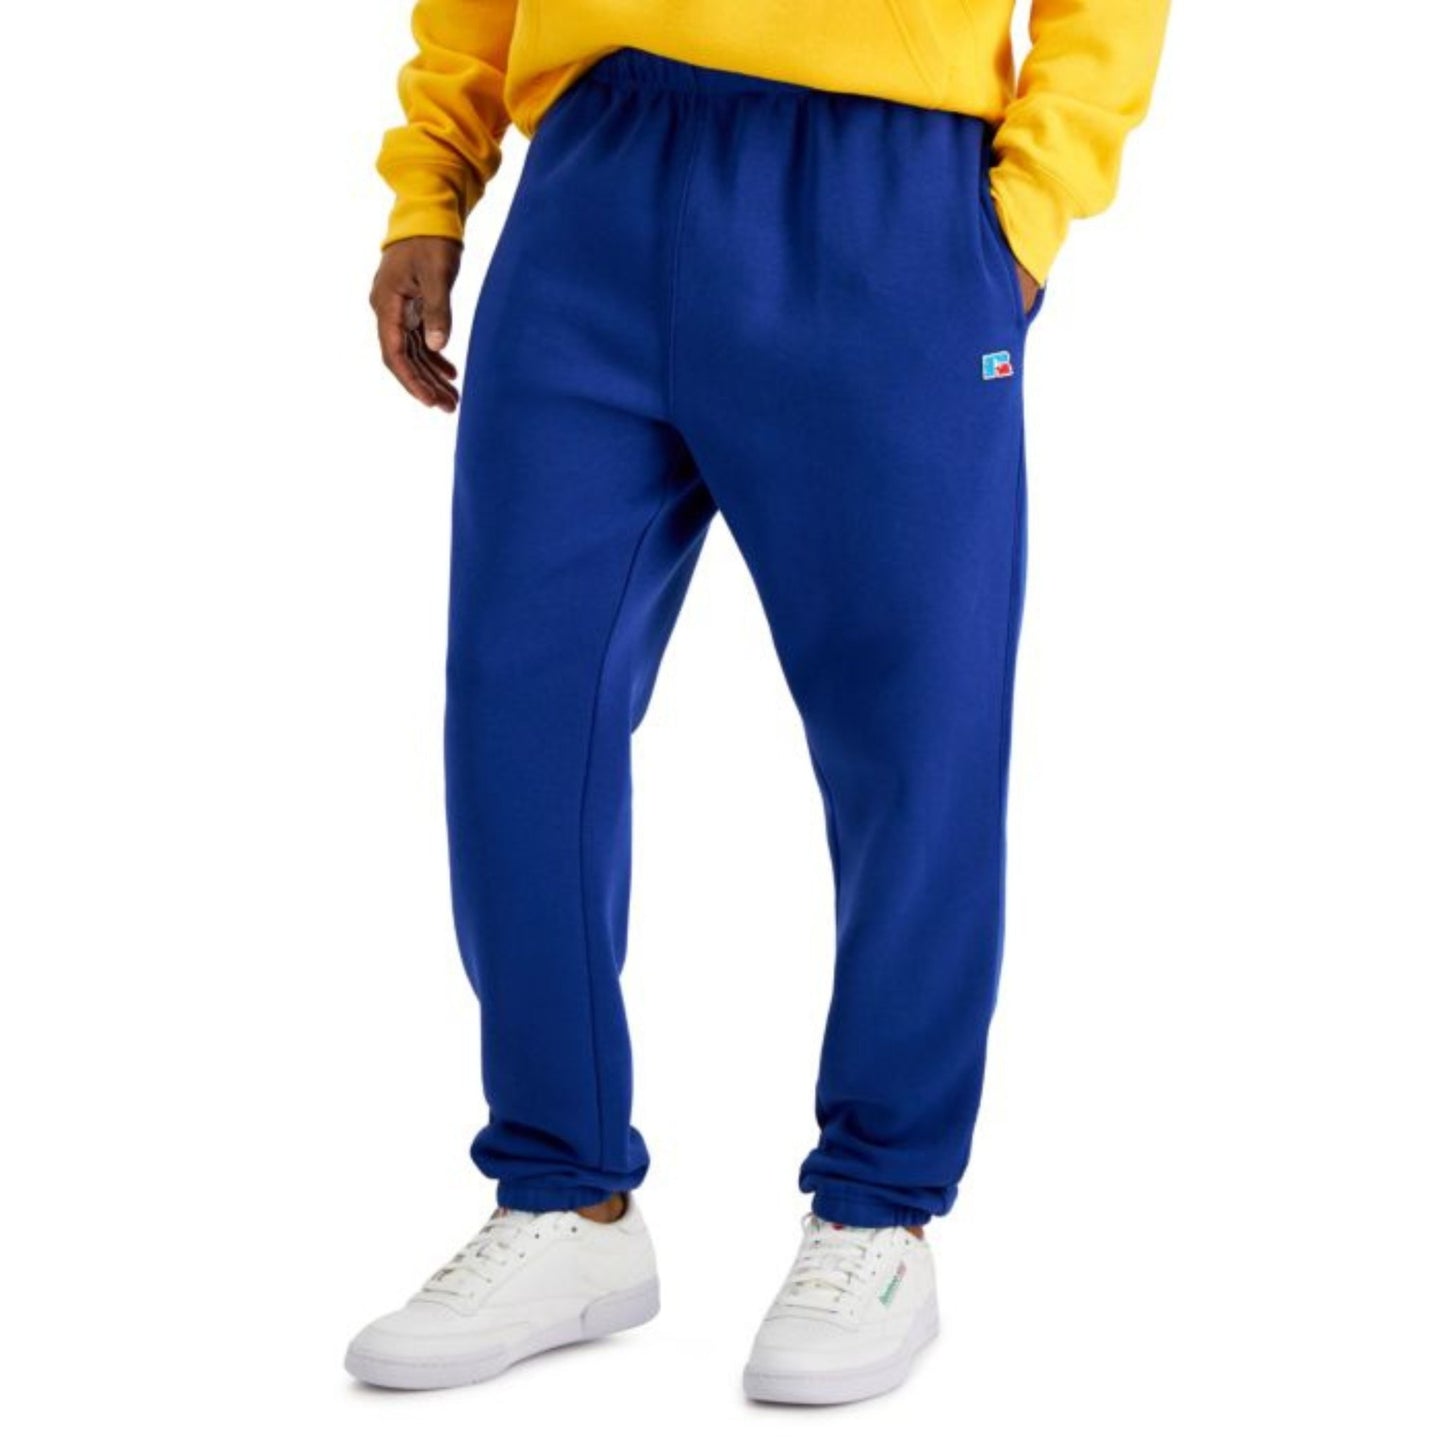 Russell Athletic Mens Fleece Drawstring Pants, Blue